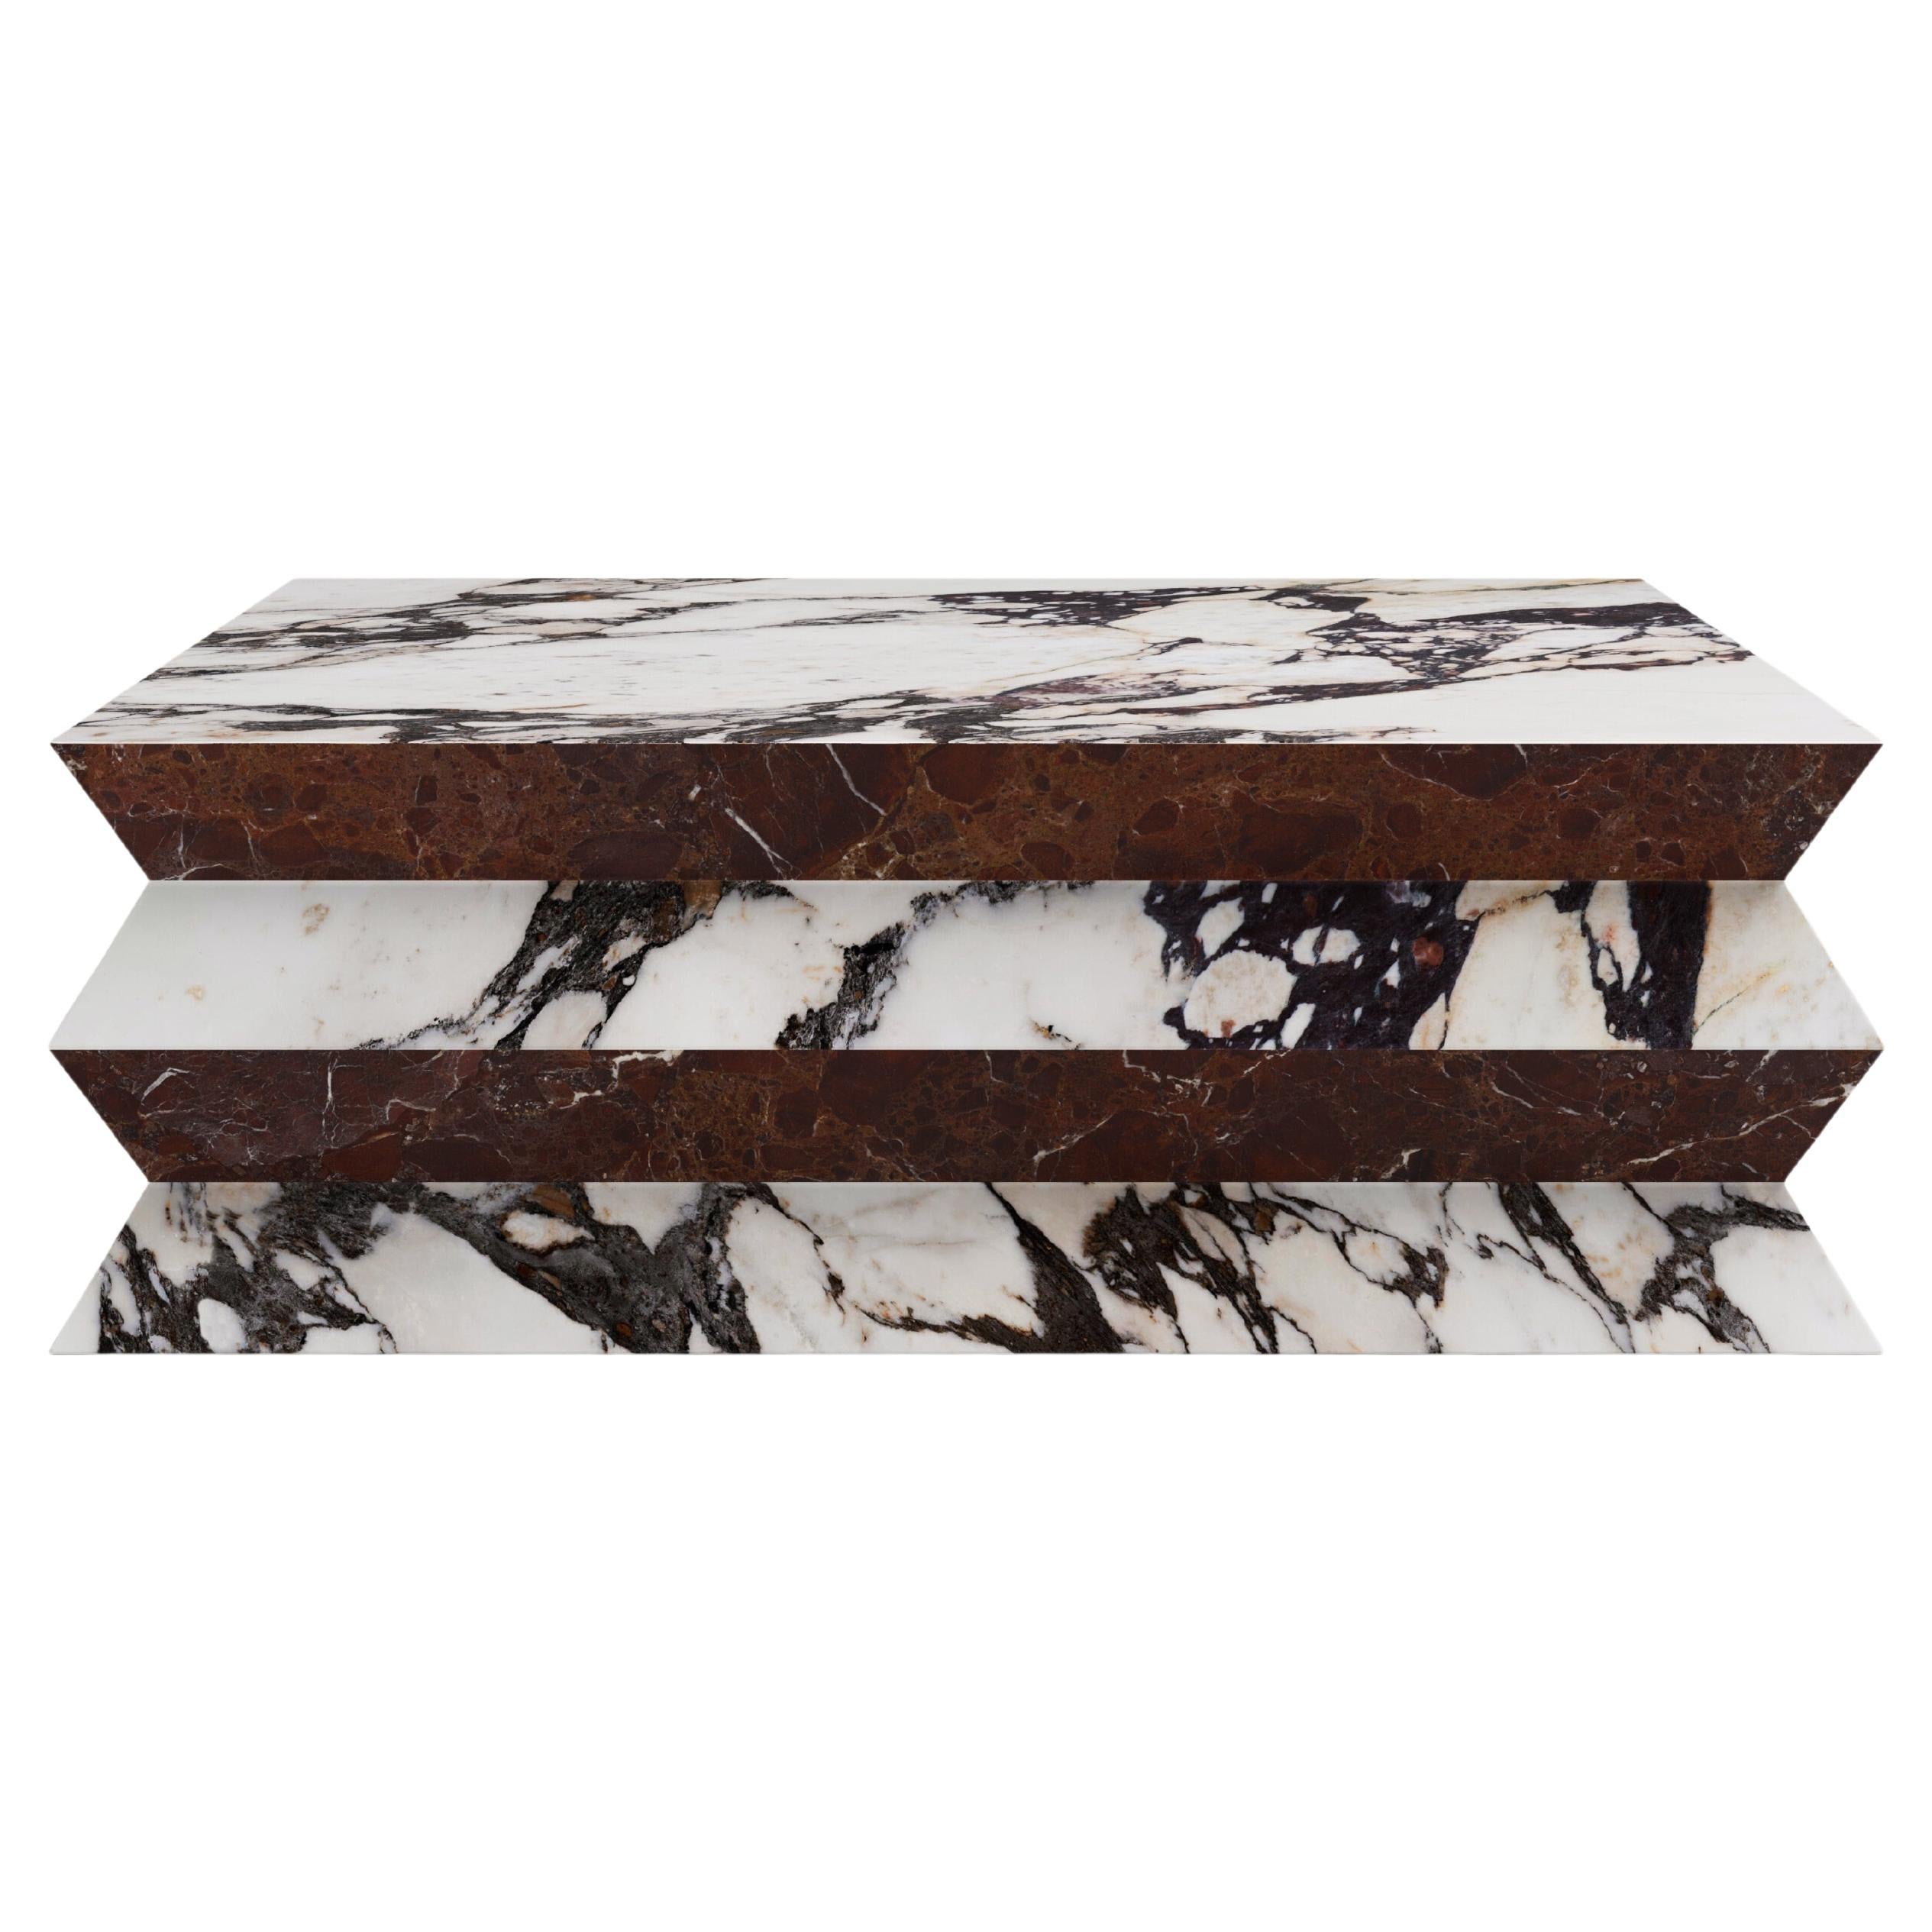 FORM(LA) table basse carrée Grinza 54 po. (L) x 54 po. (L) x 16 po. (H) marbre Calacatta Viola en vente